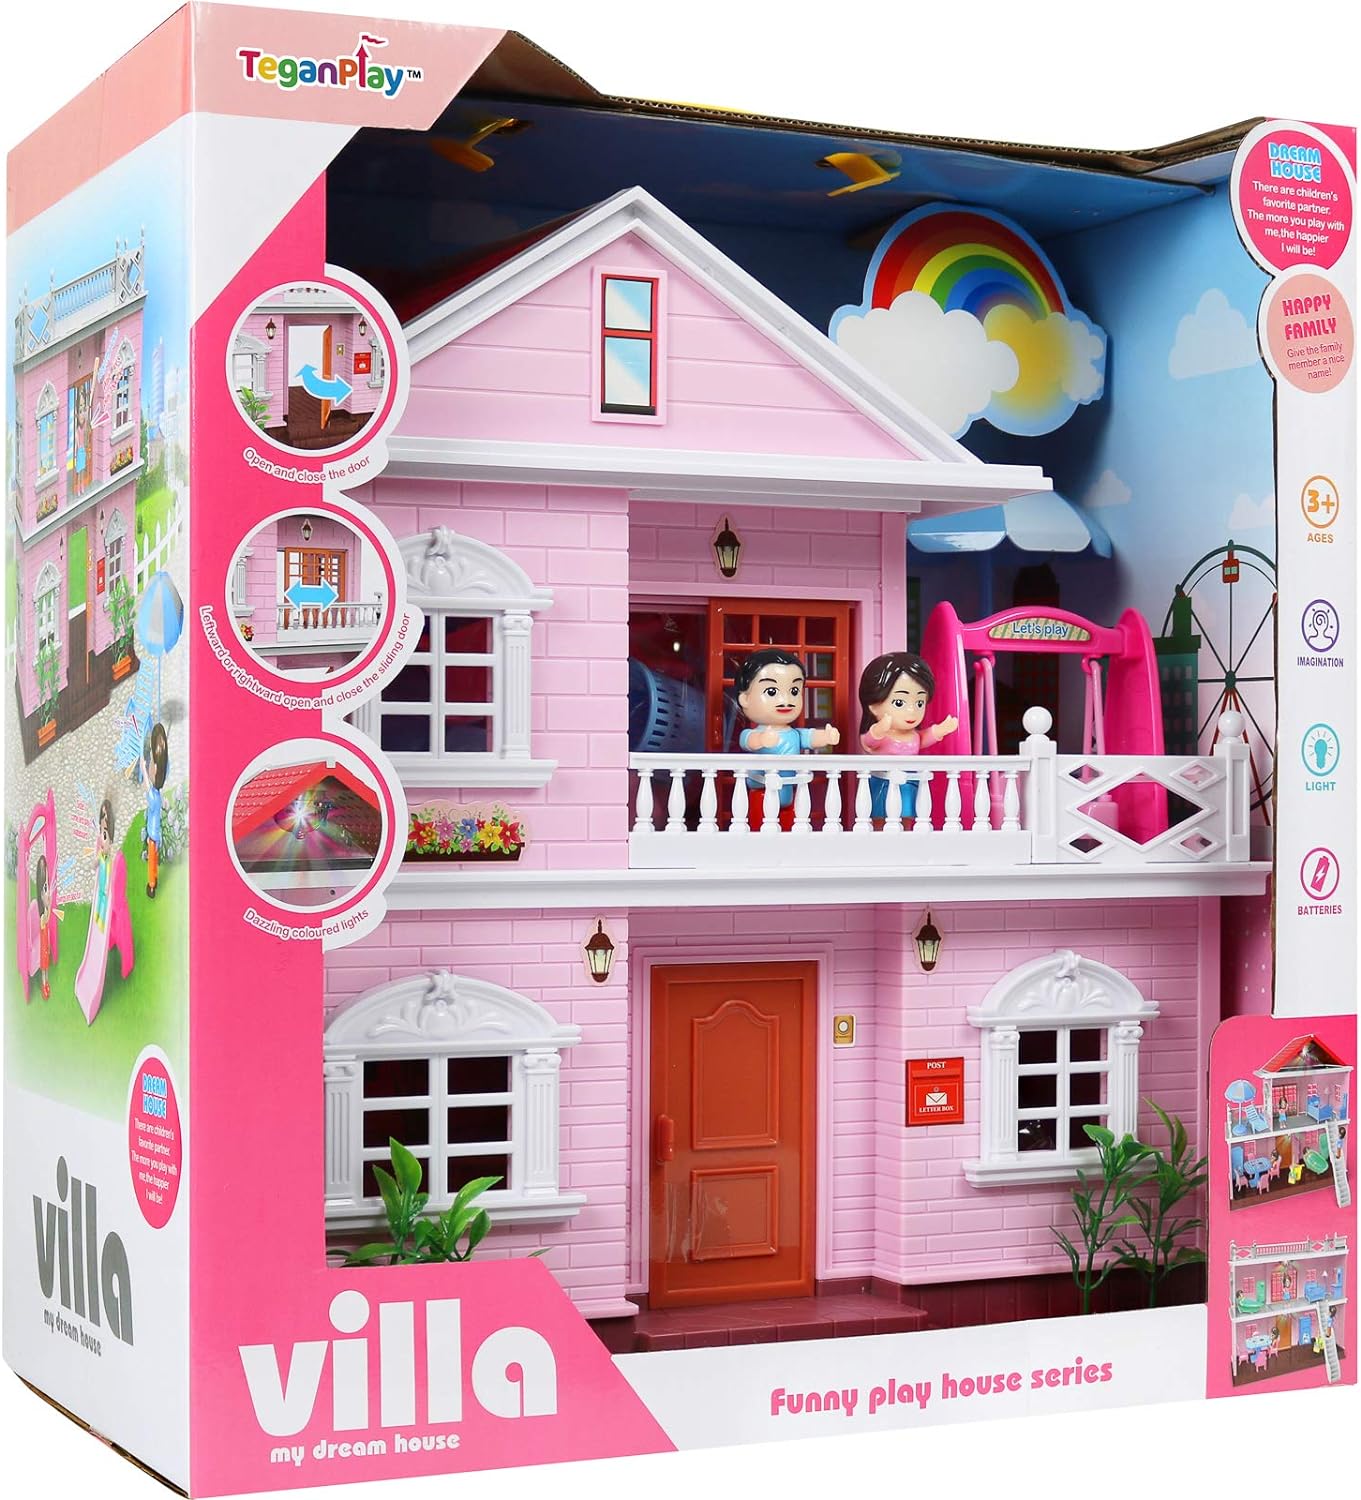 TeganPlay Doll House for Girls | Kids Dream House Dollhouse